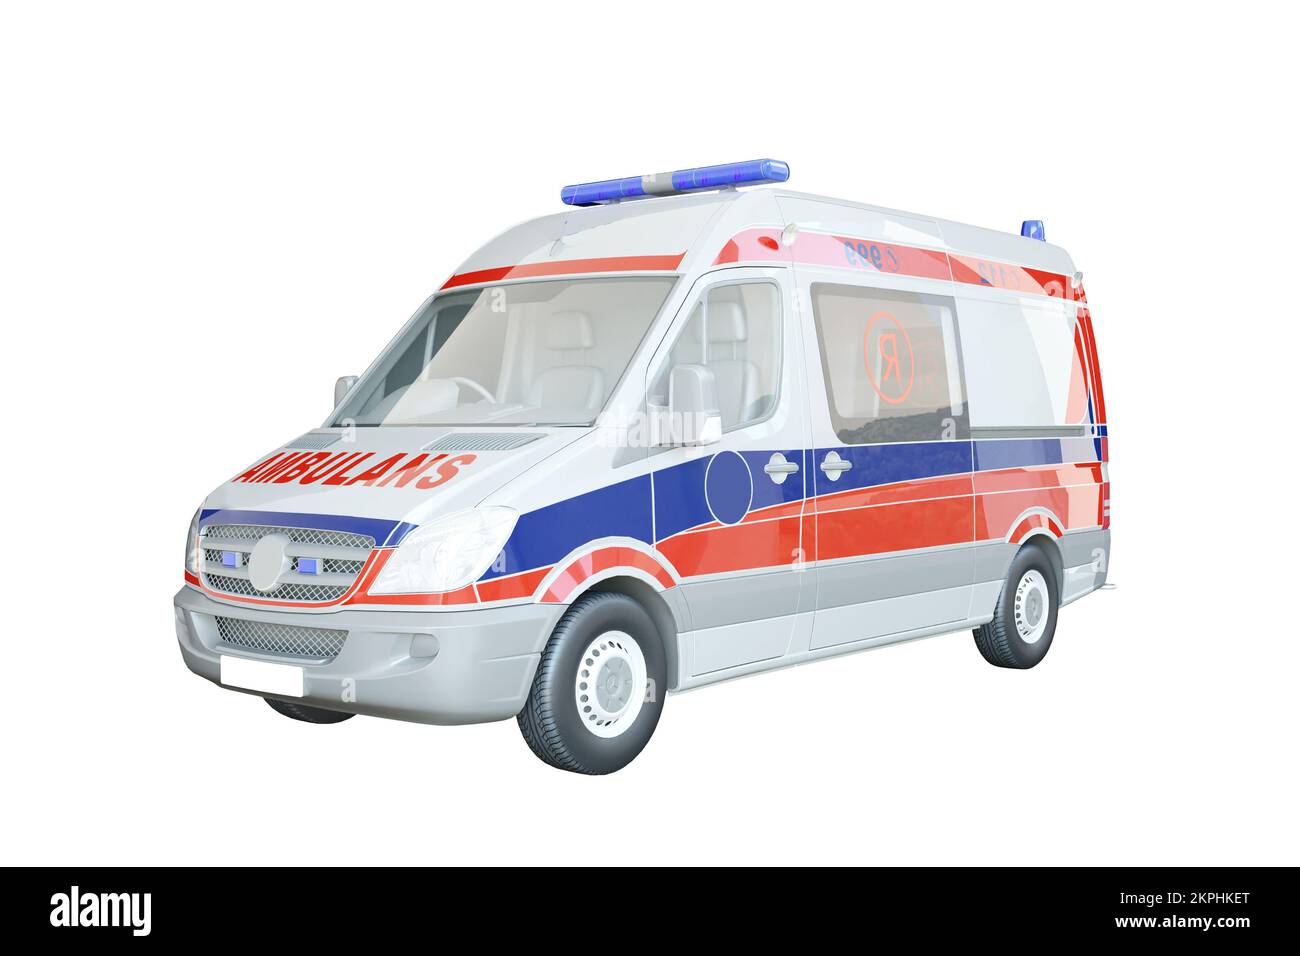 Ambulance emergency on a white background. 3D rendering, 3d model illustration. Stock Photo